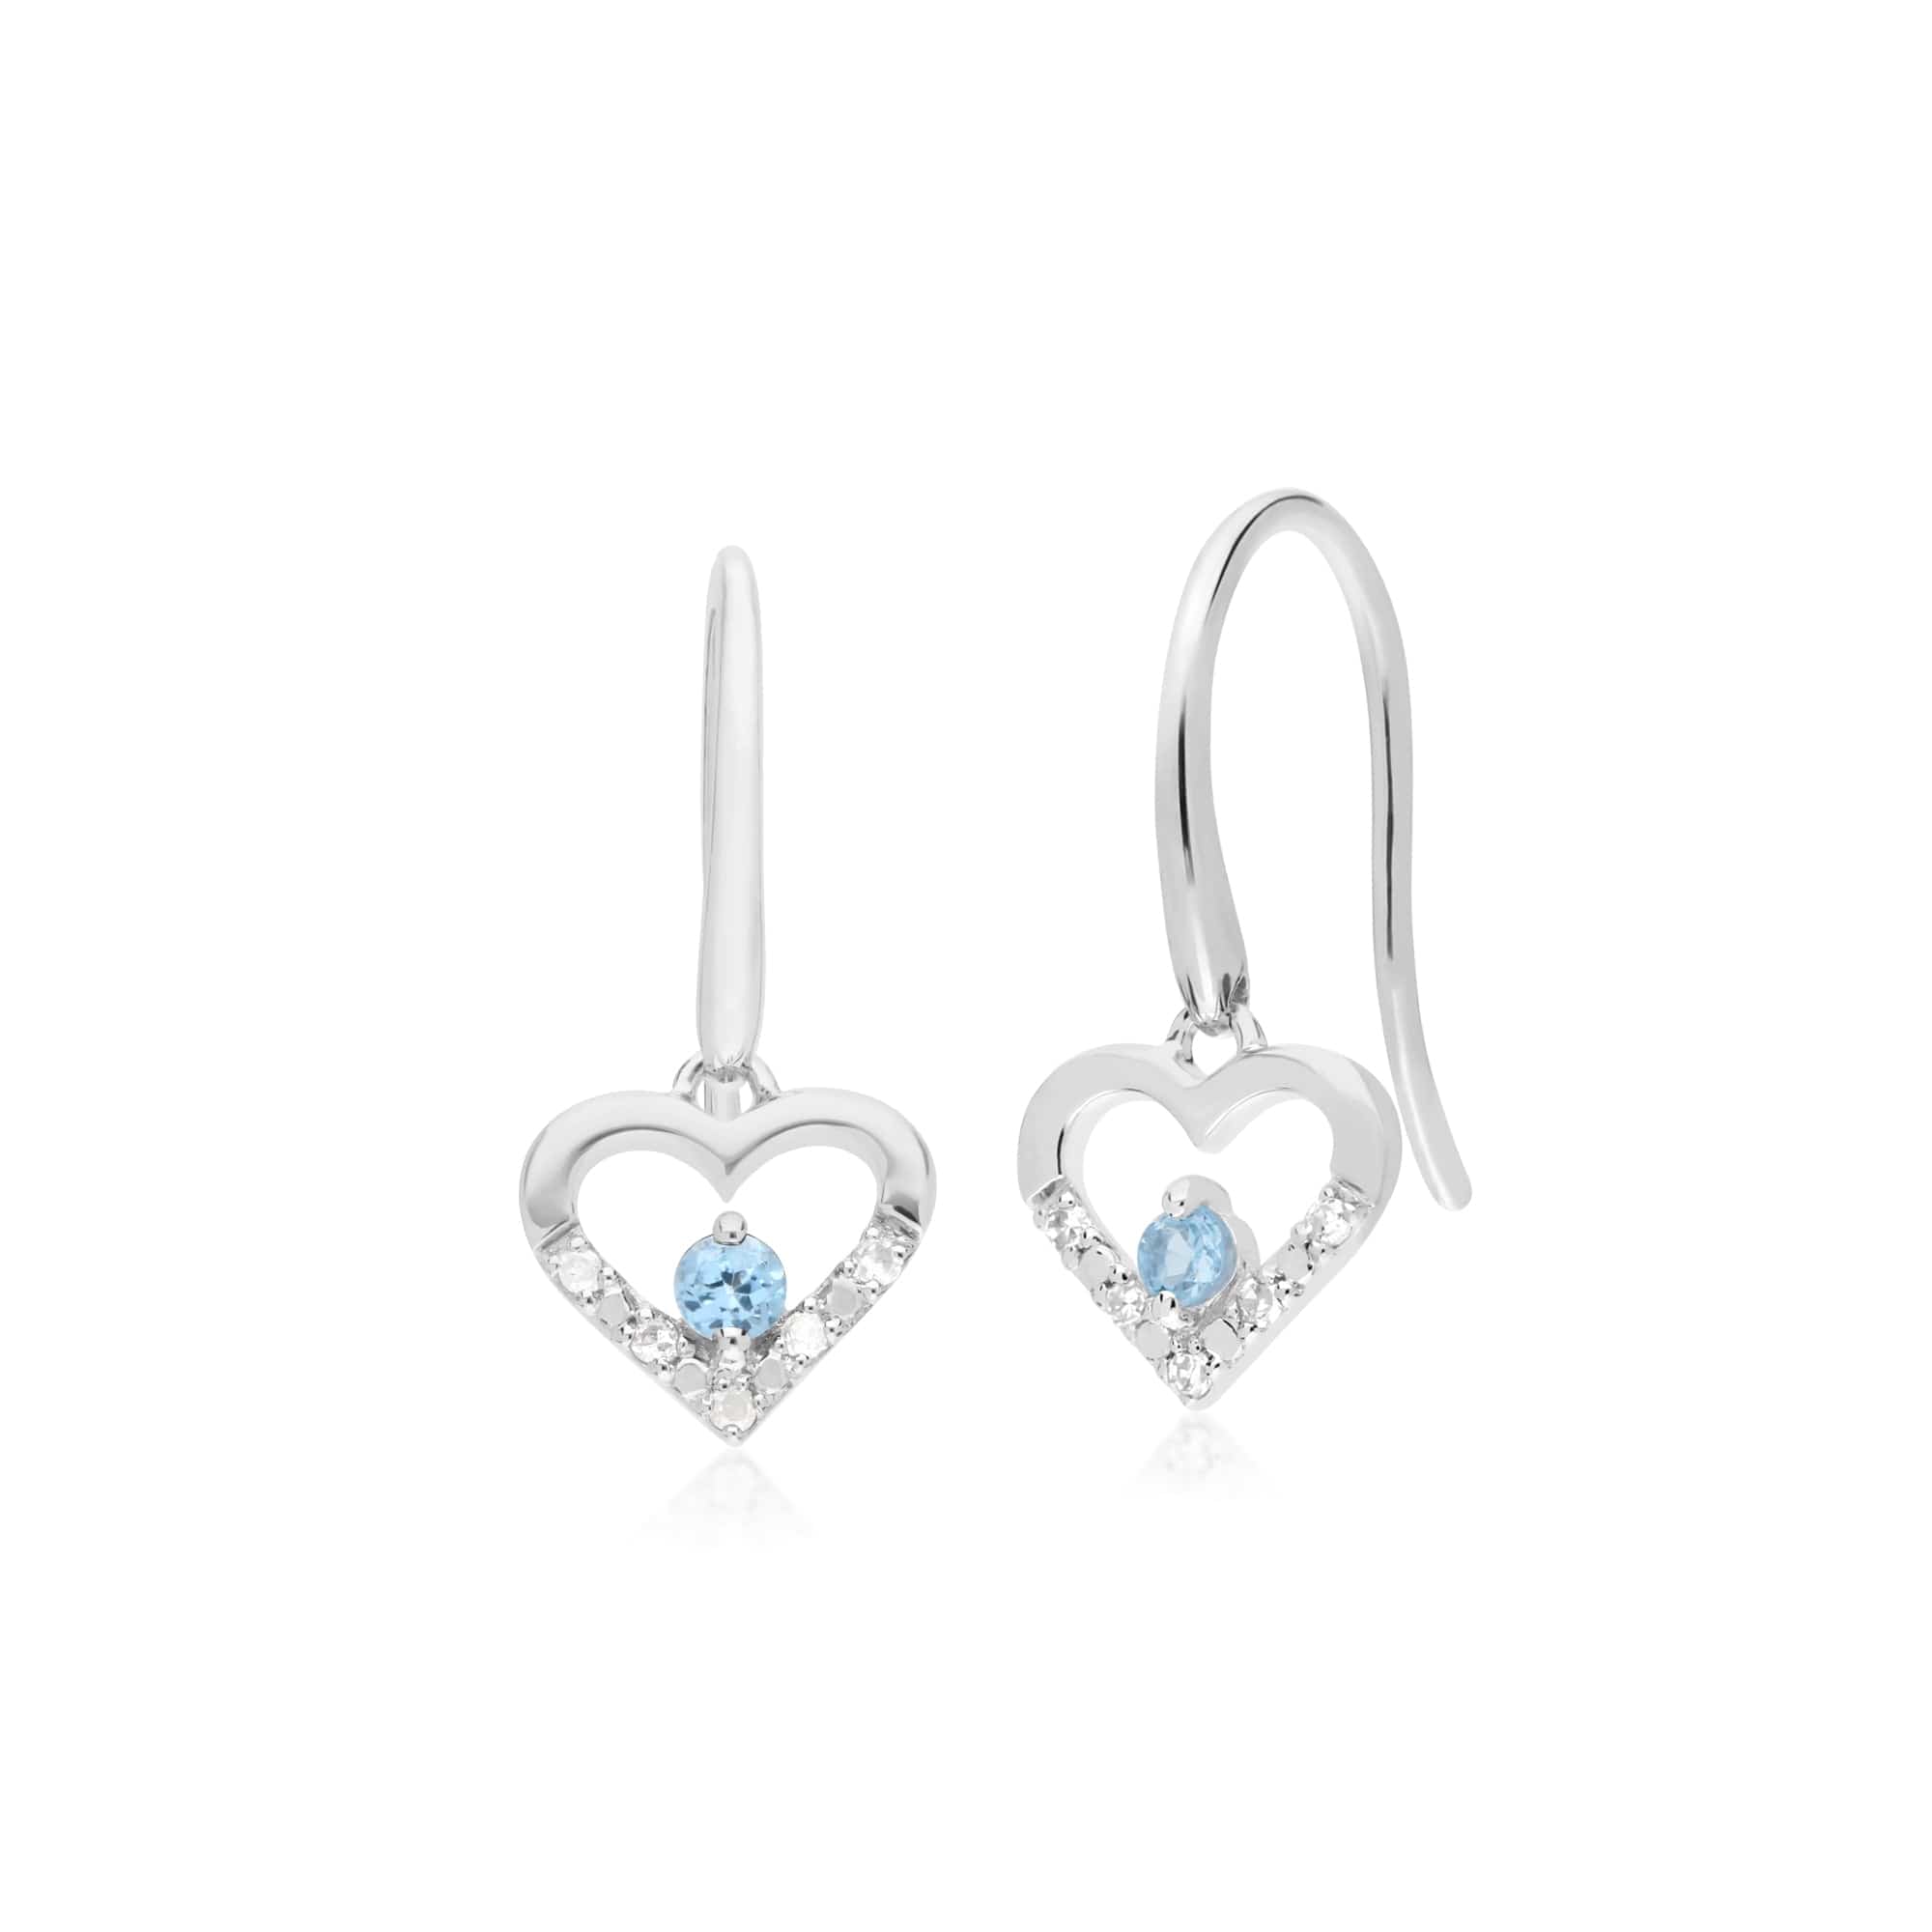 162E0258069-162P0219069 Classic Round Blue Topaz & Diamond Heart Drop Earrings & Pendant Set in 9ct White Gold 2